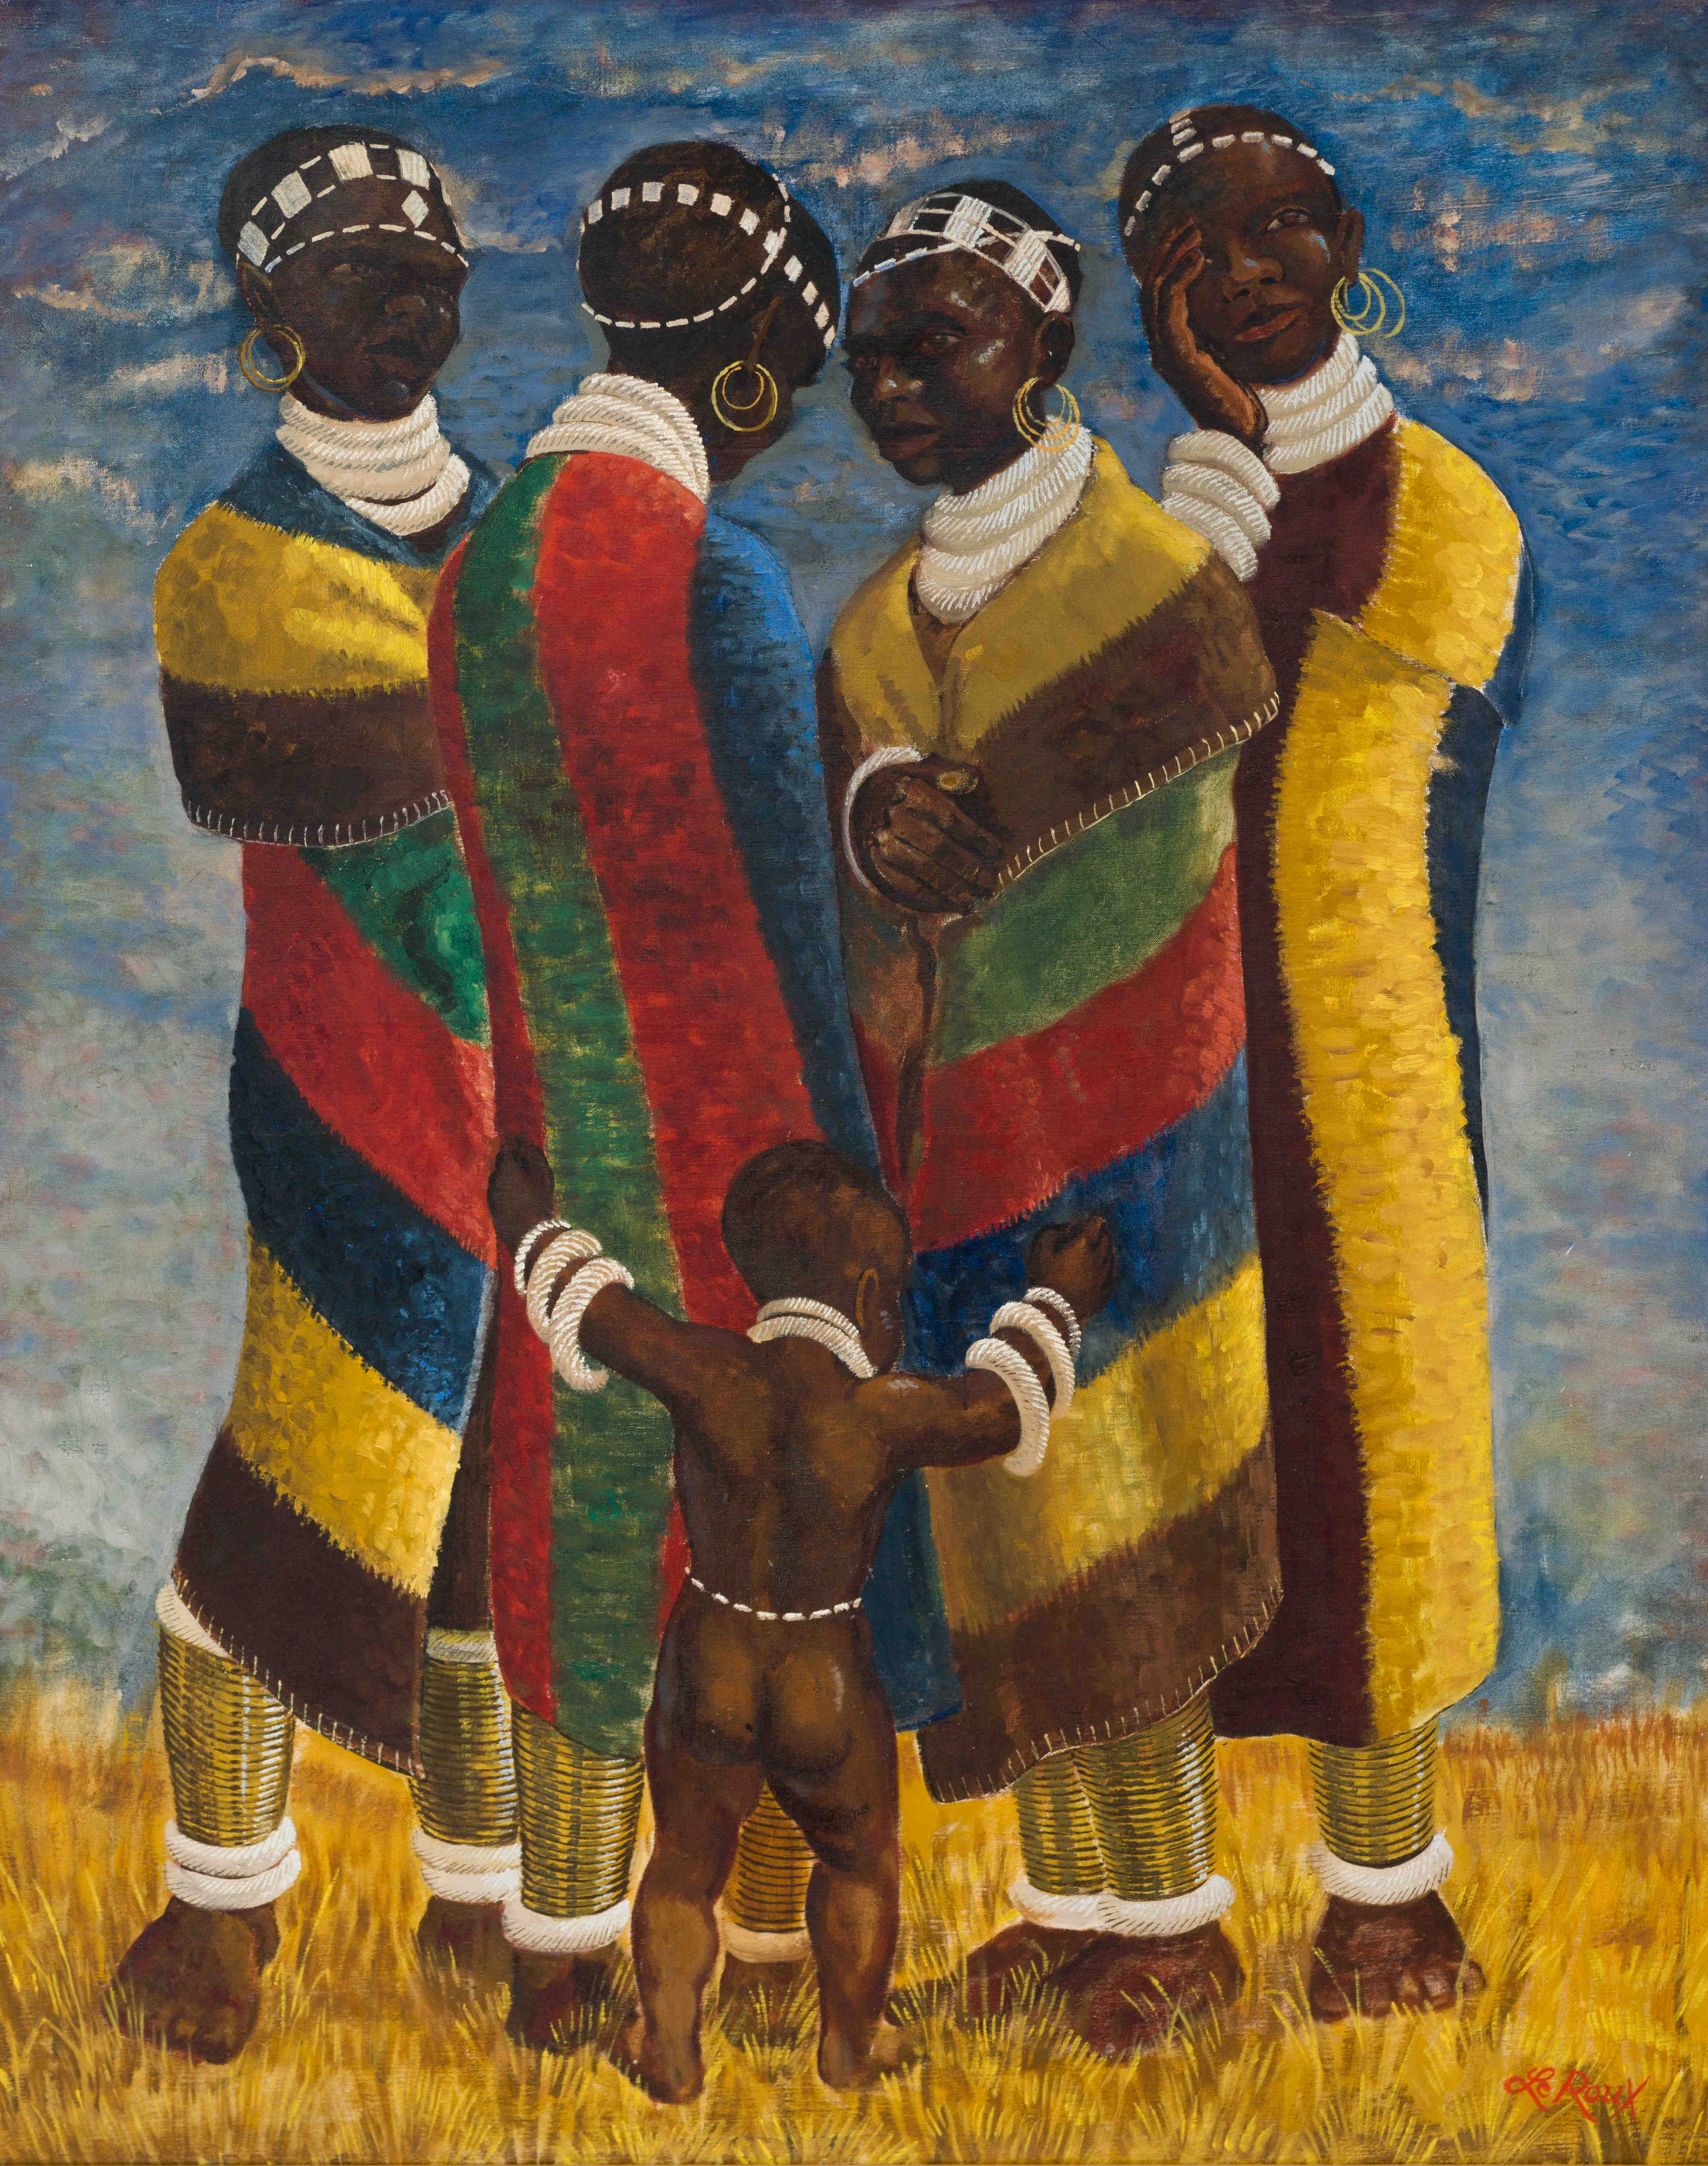 Le Roux Smith Le Roux; Four Ndebele Women